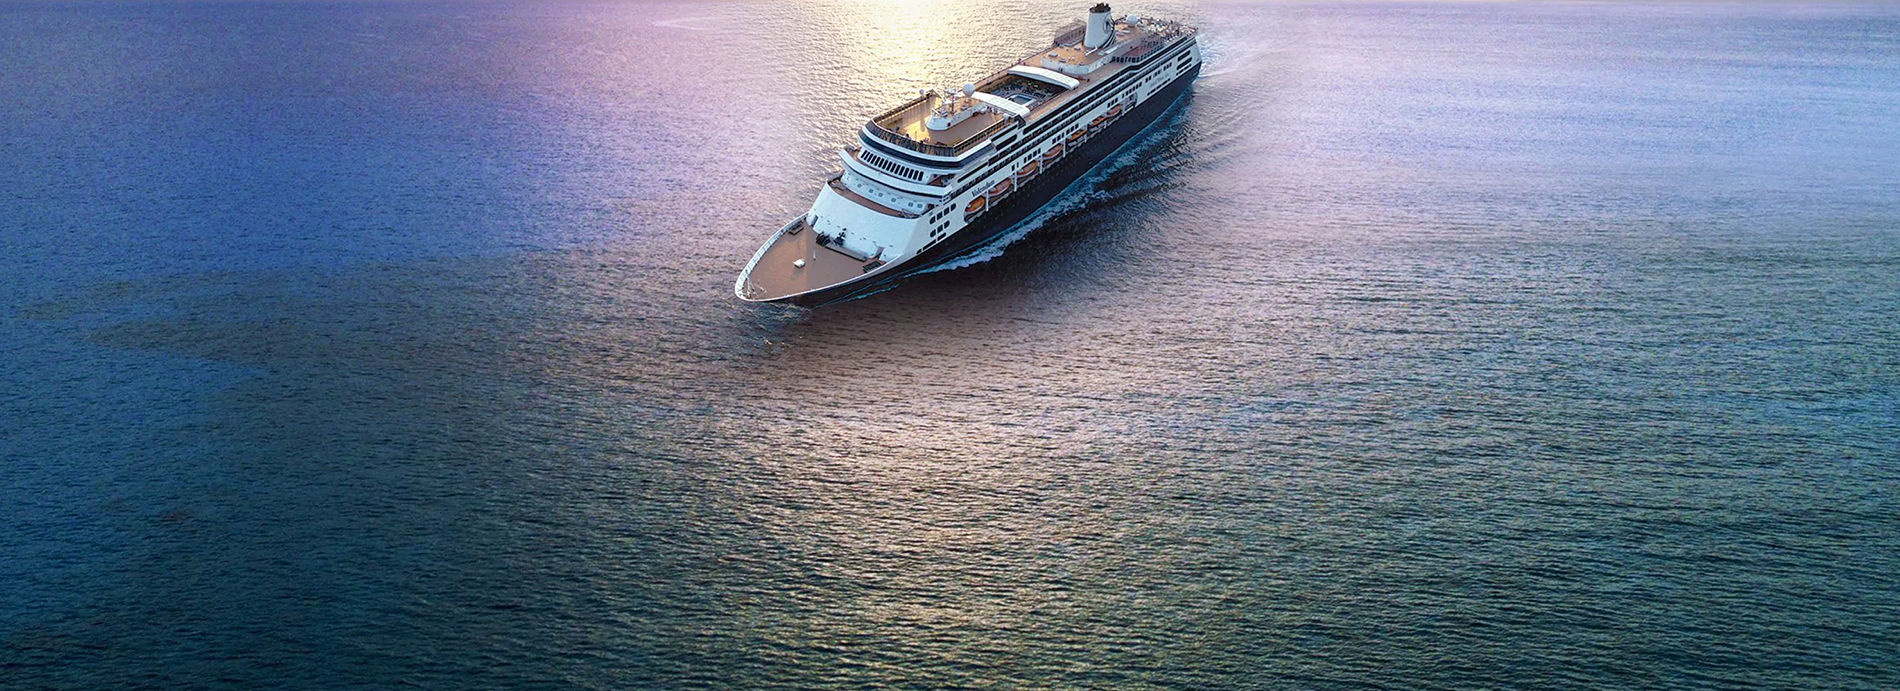 cruise ship on ocean